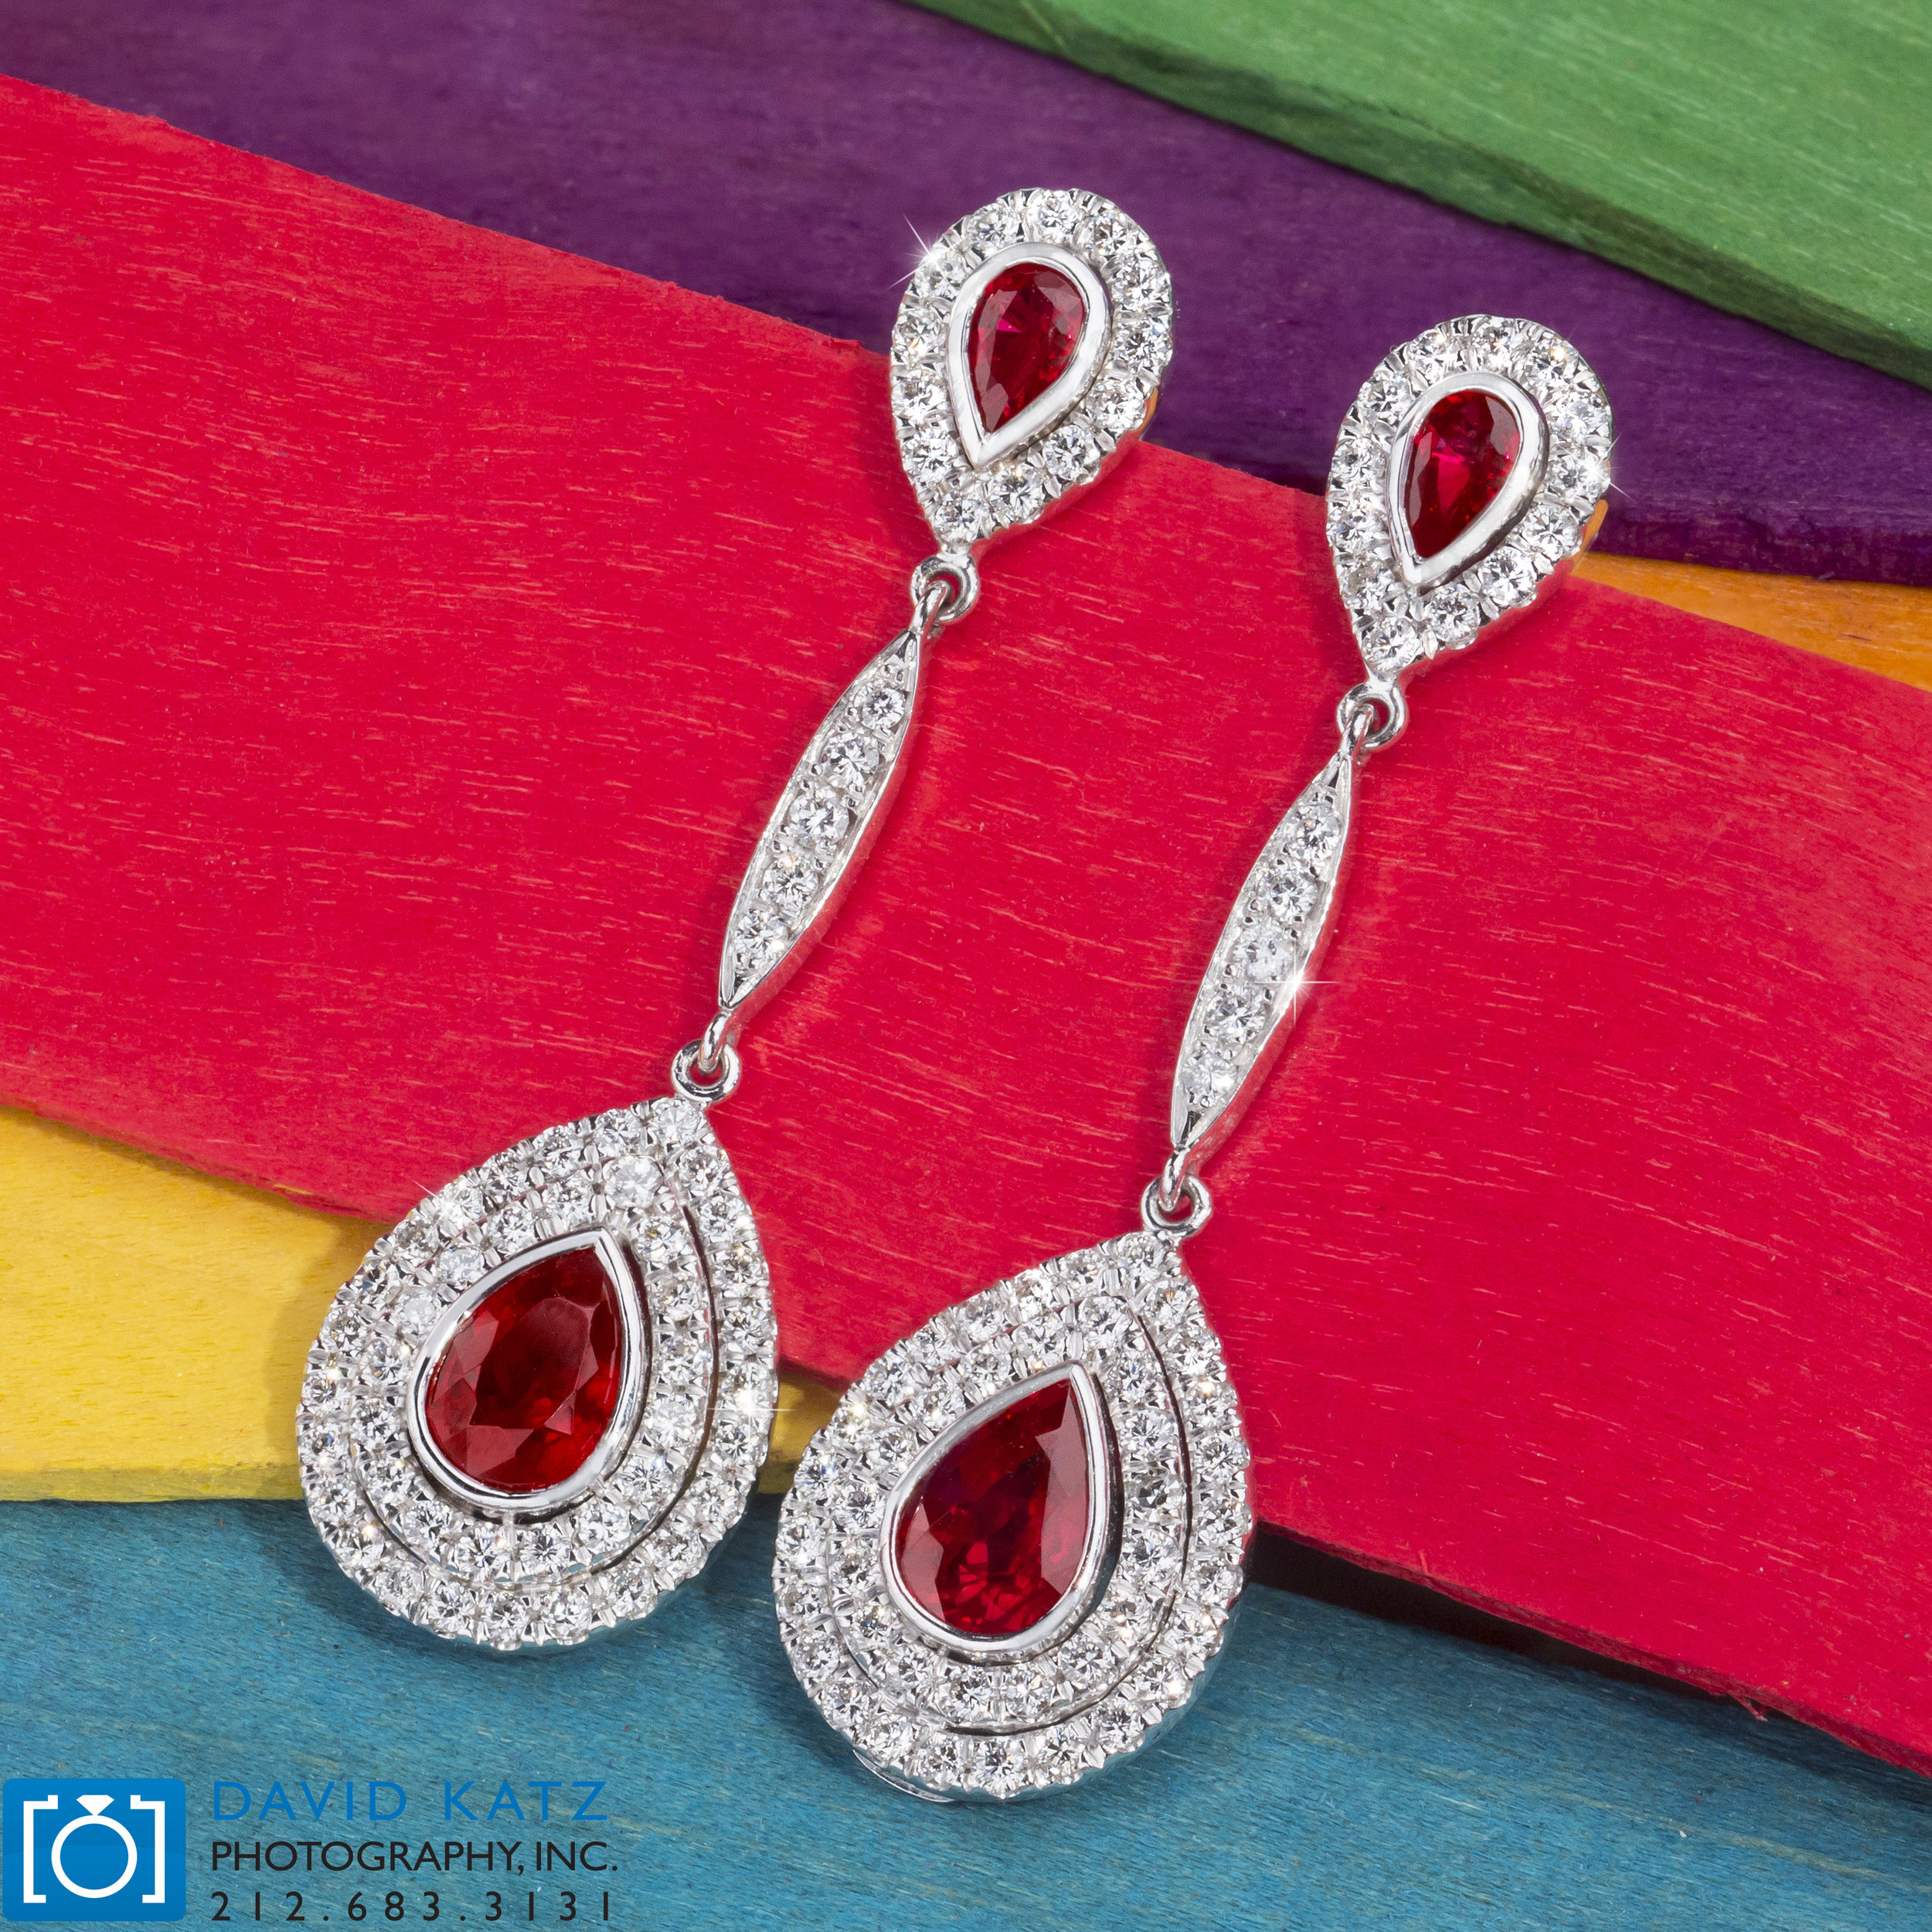 Ruby Earrings on Colors_NEWLOGO.jpg